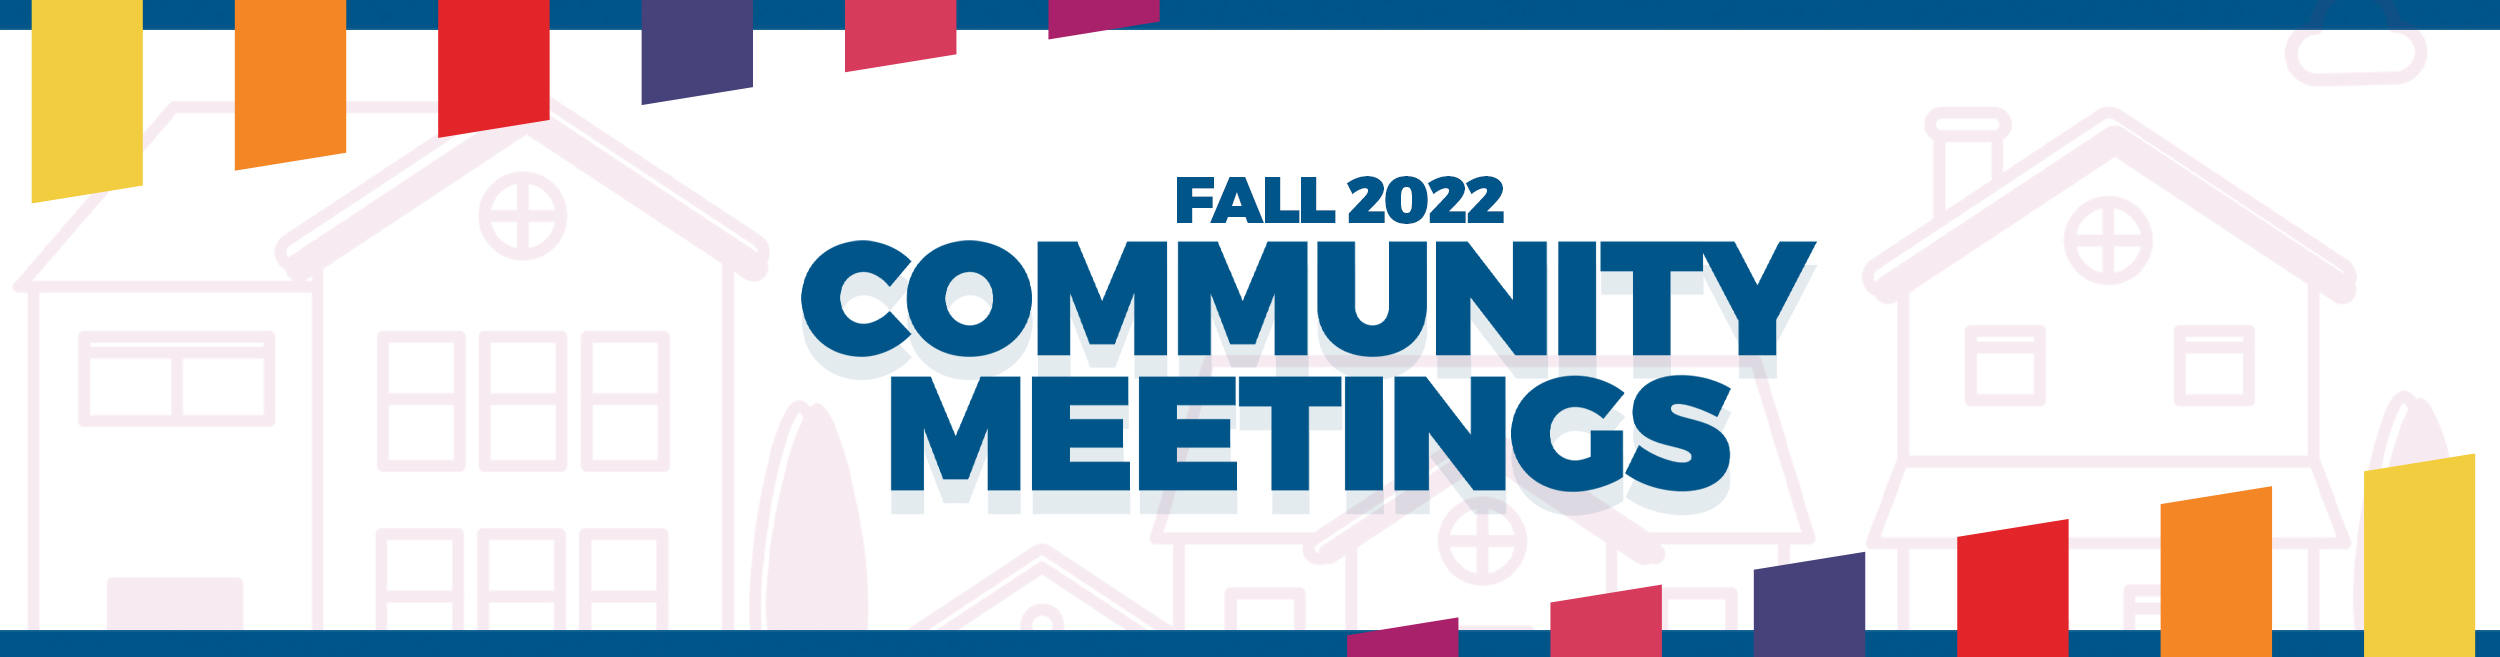 HCDD Fall Community Meeting